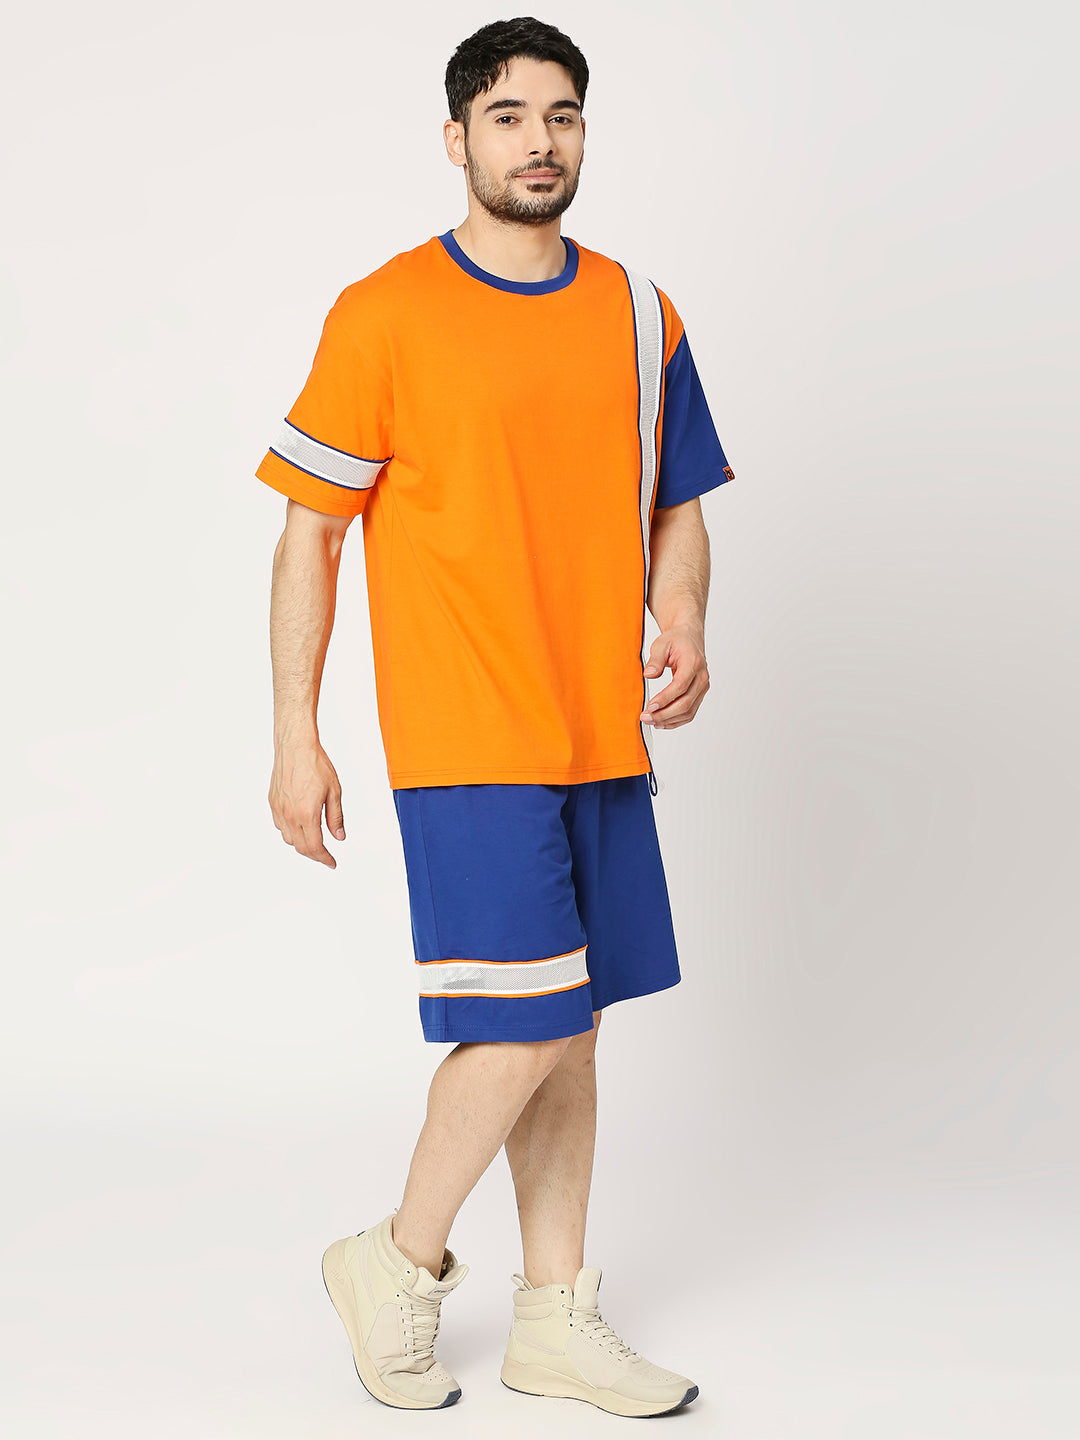 Buy BLAMBLACK Men's colour-blocked Air mesh panel detail T-Shirt with Shorts Co-ord set